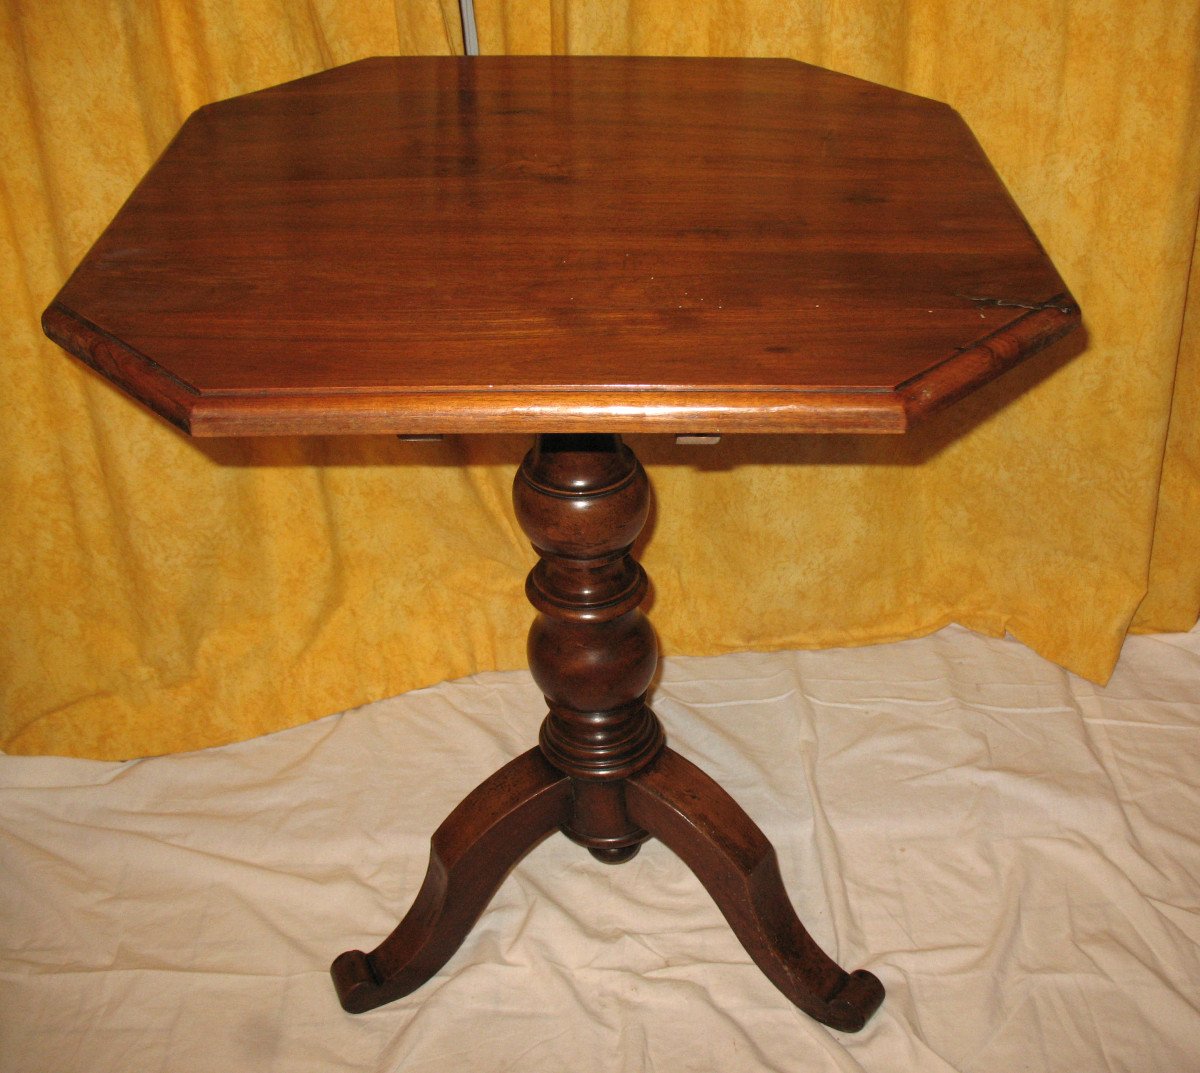 Octagonal Walnut Tilting Pedestal Table, 19th Century Restoration Period